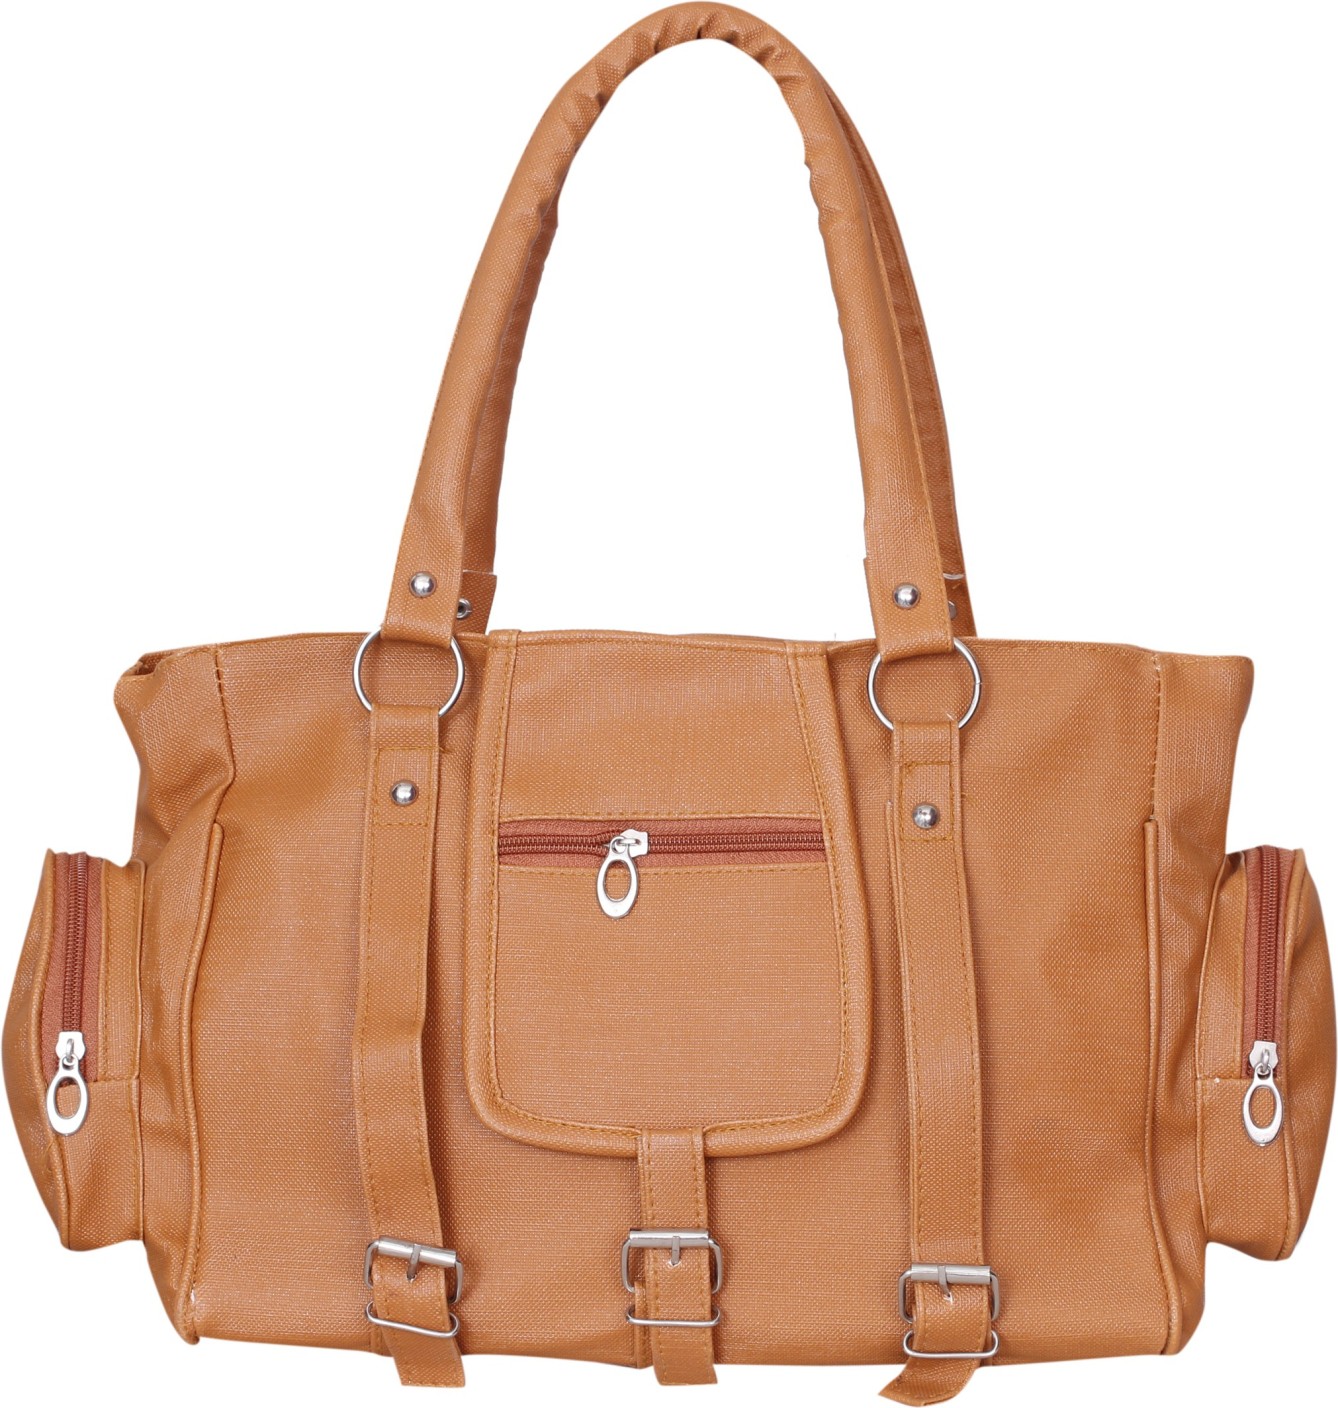 Image result for Flipkart 85% off on Handbags